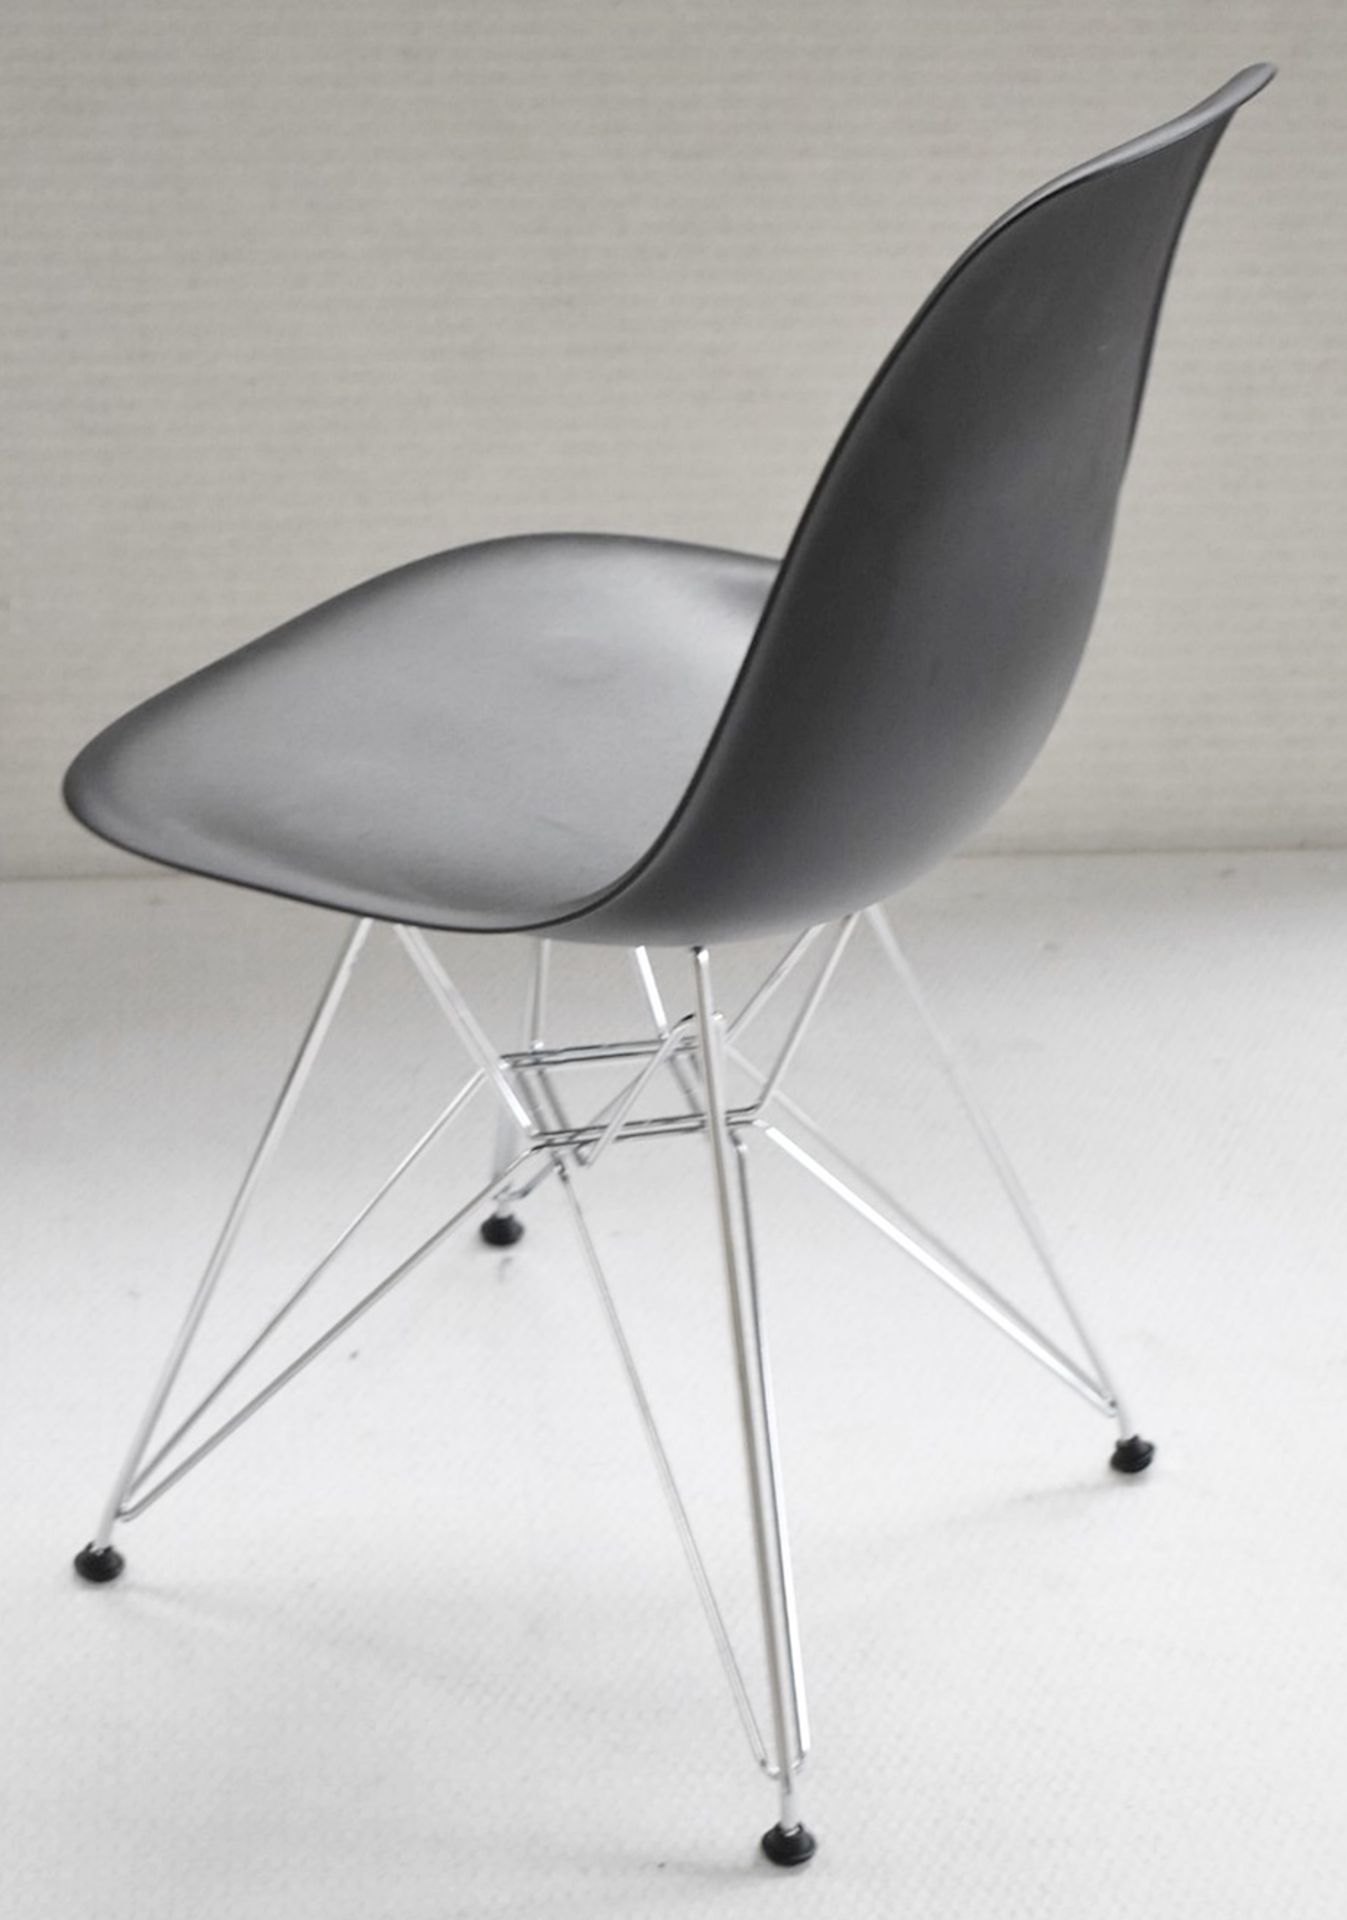 1 x VITRA Eames DSR Designer Plastic Chair In Black & Chrome - Original RRP £290.00 - Image 6 of 7